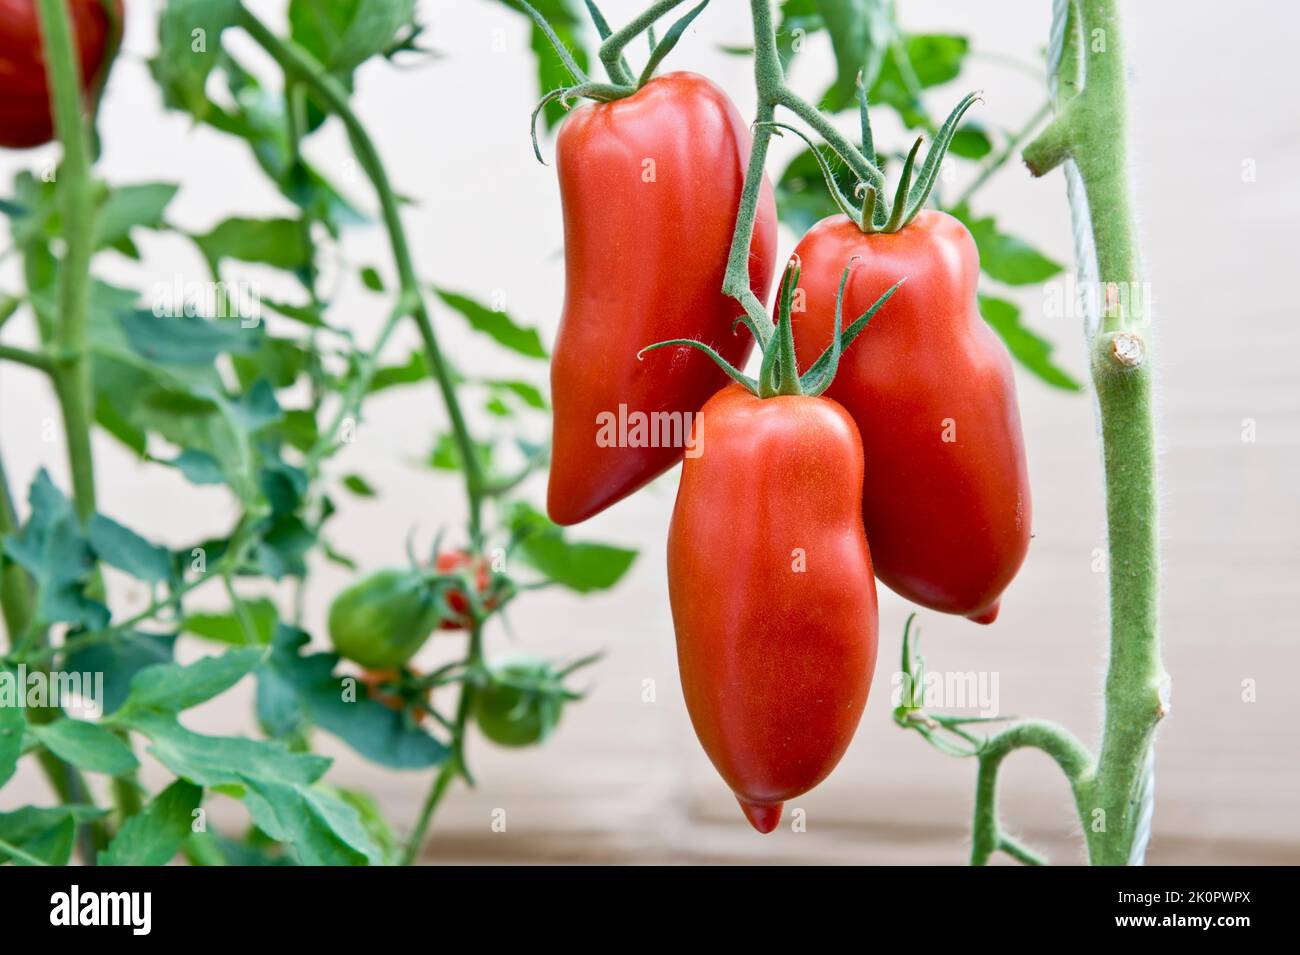 Tomato Bellandine growing on the plant. Stock Photo